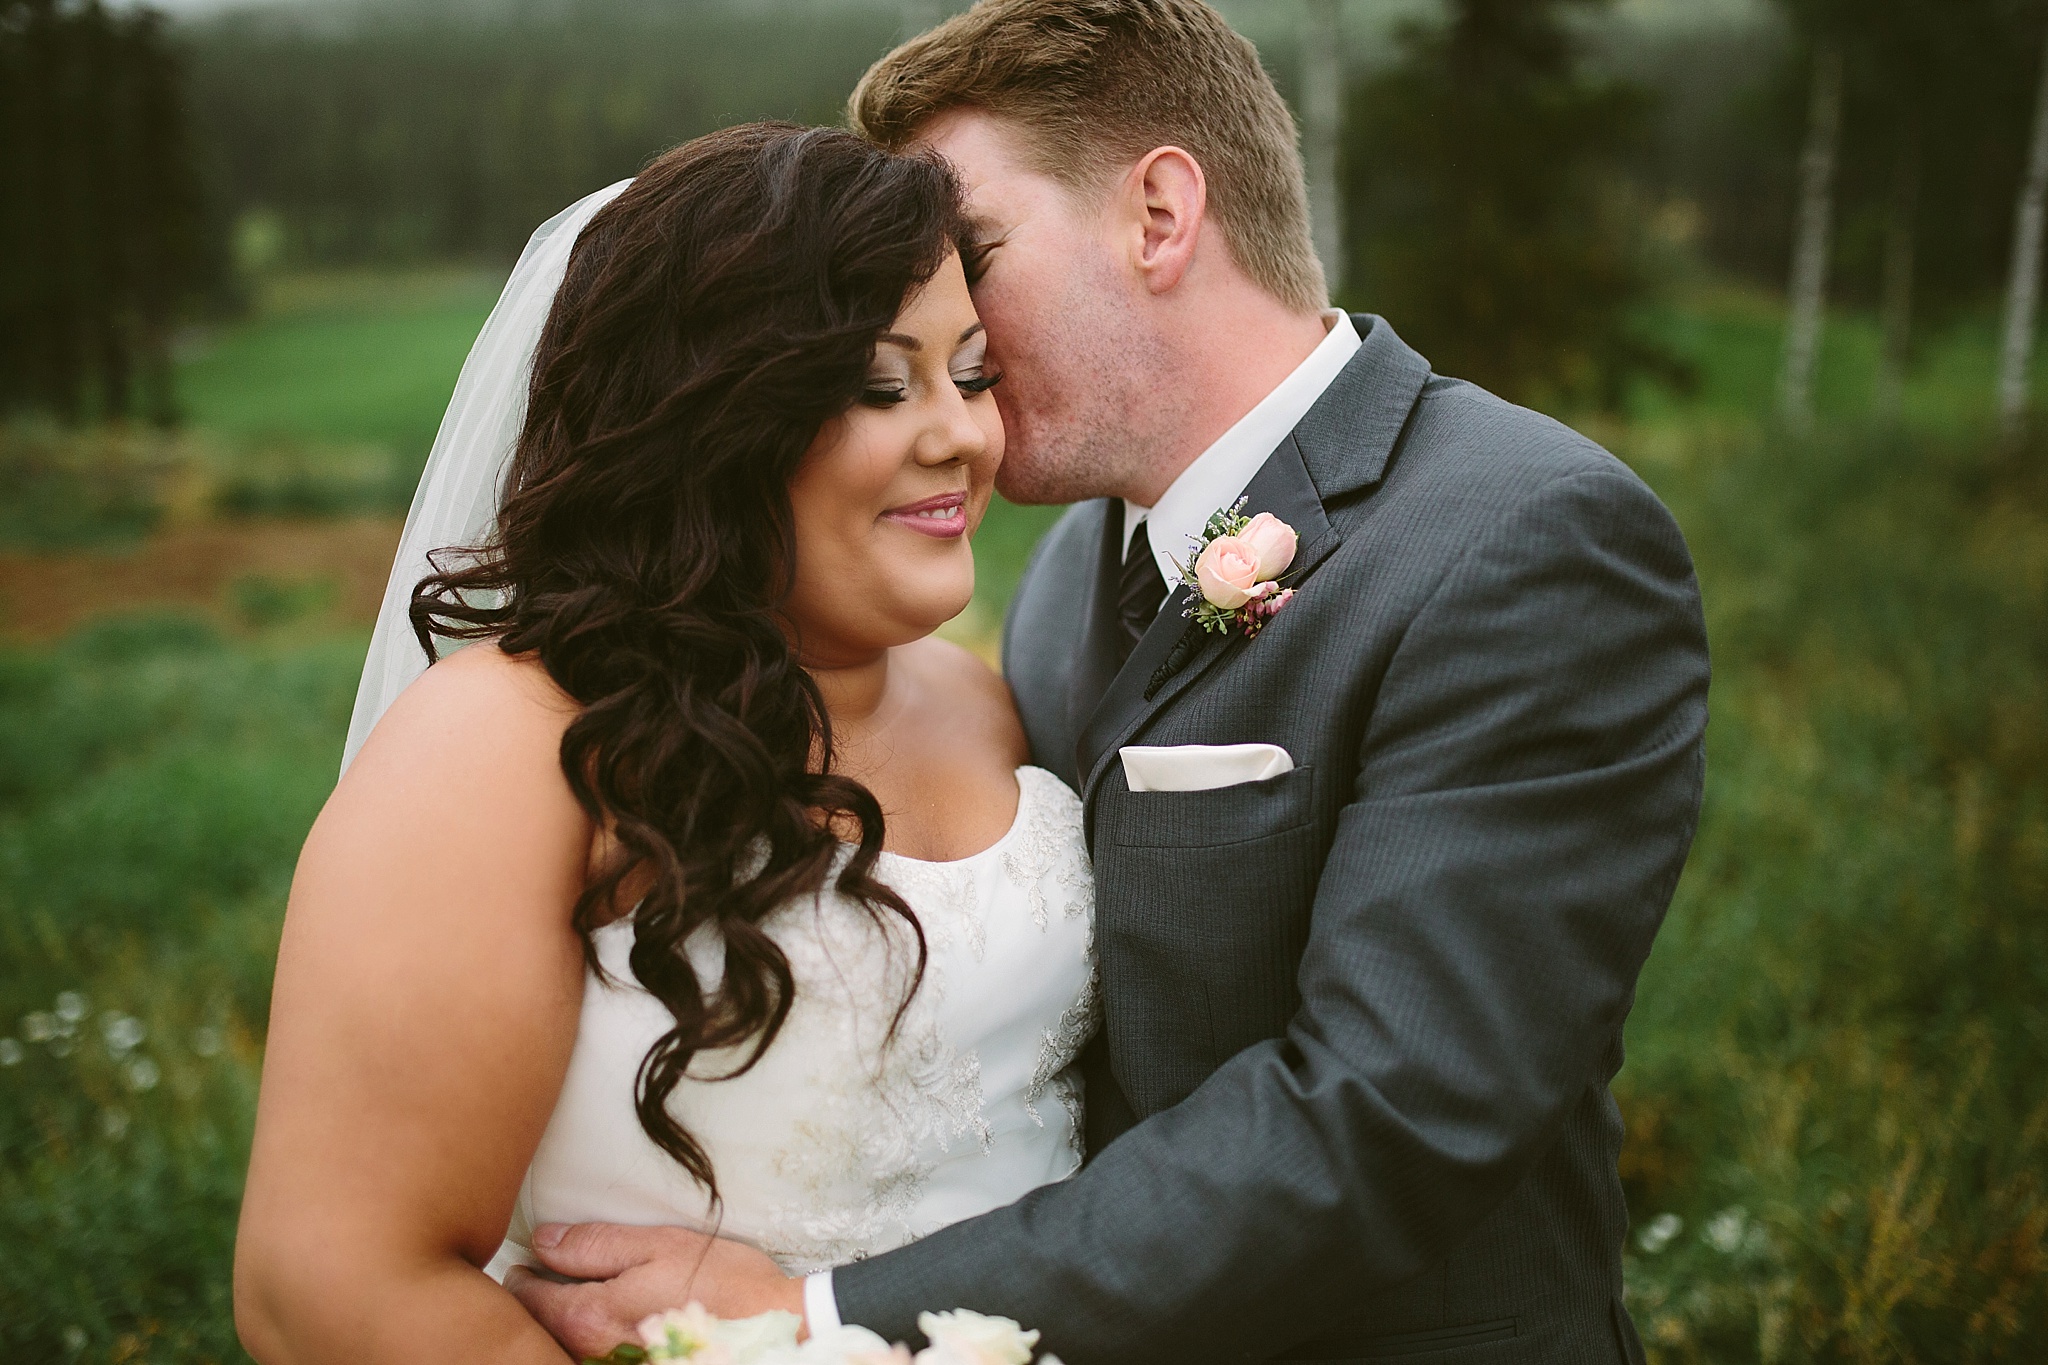 Silvertip Resort Canmore Alberta Wedding Photos Bride and Groom Kissing